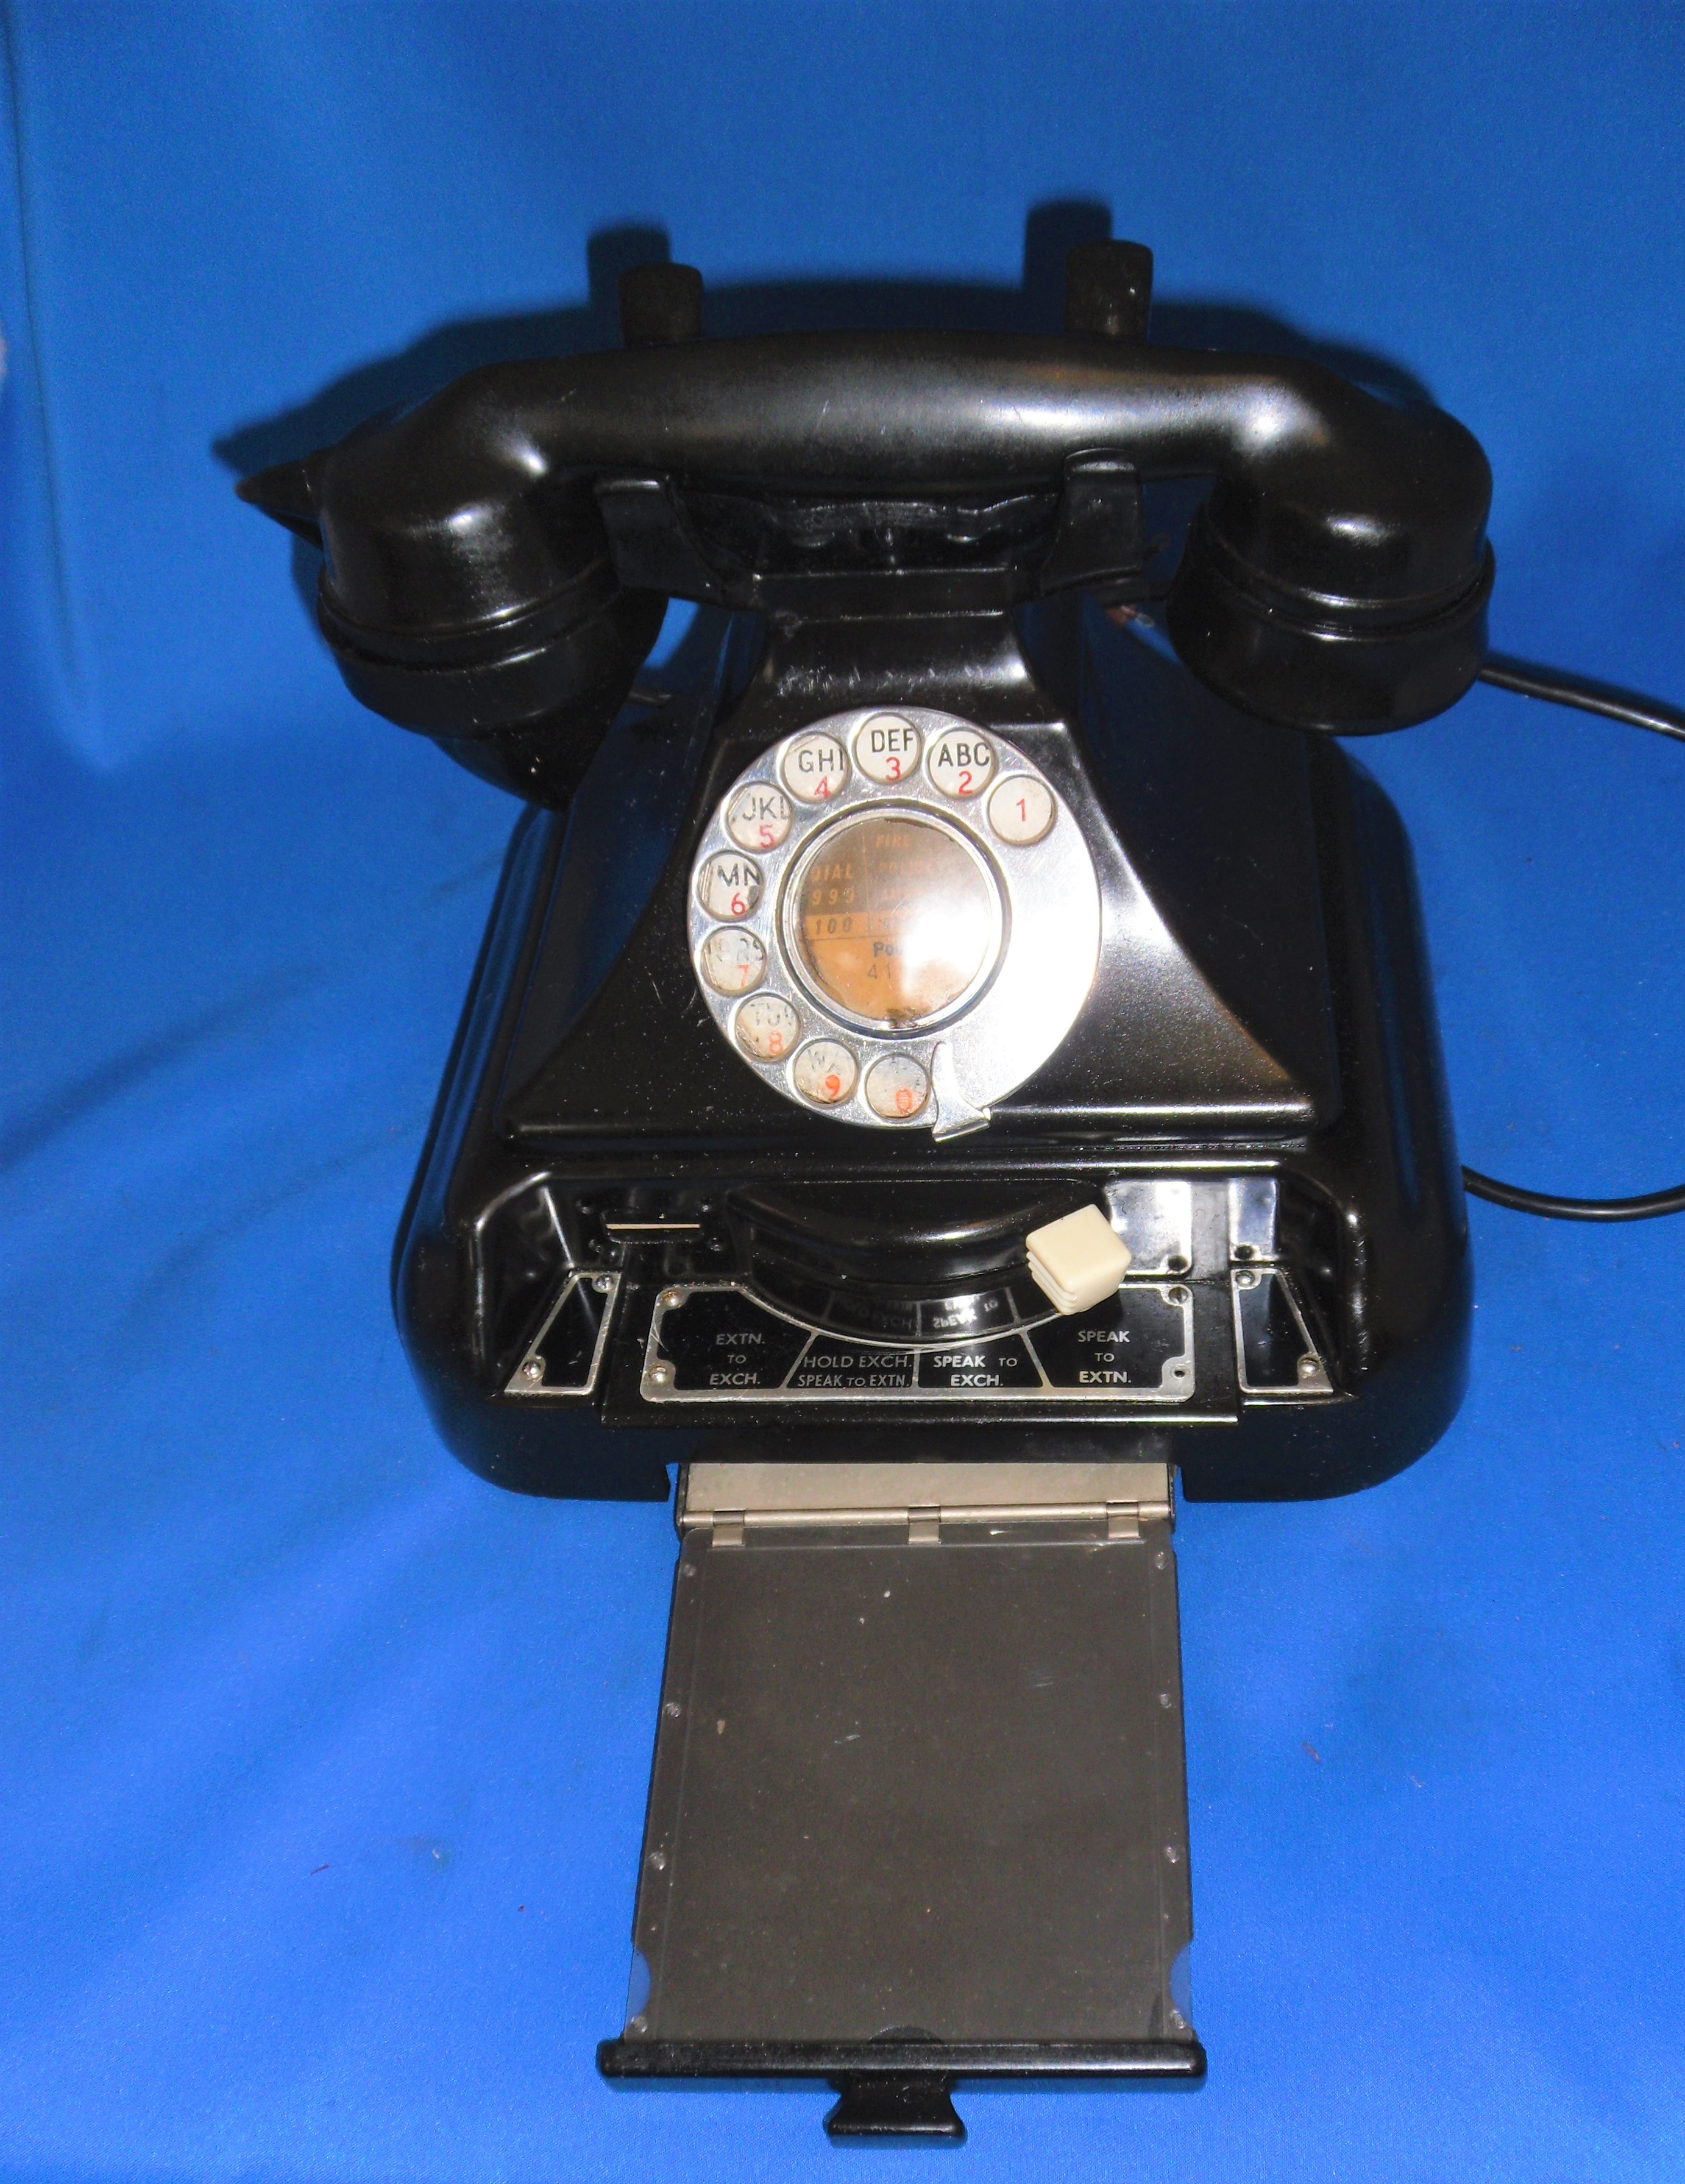 1930s Telephone Pyramid GPO King with Intercom Switching 232 Series Bakelite Telephone With Interco - Image 8 of 9